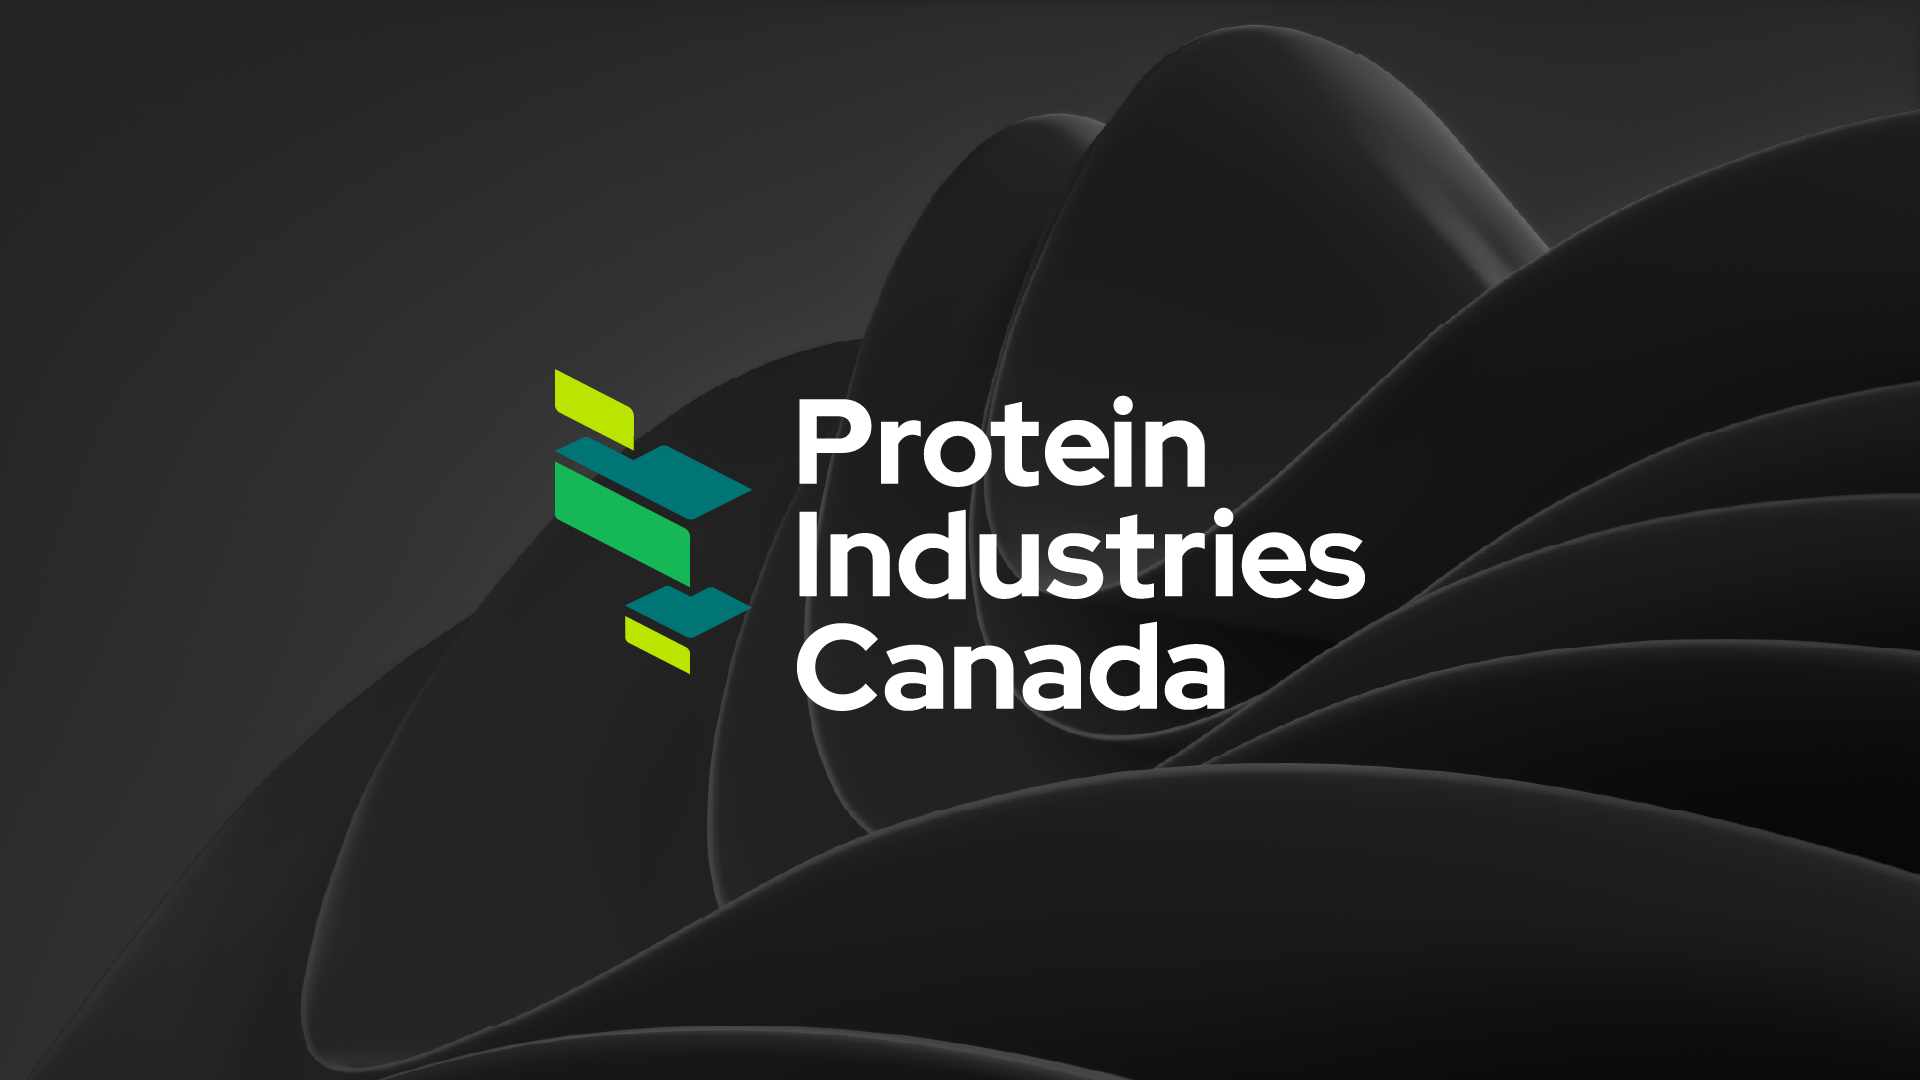 (c) Proteinindustriescanada.ca